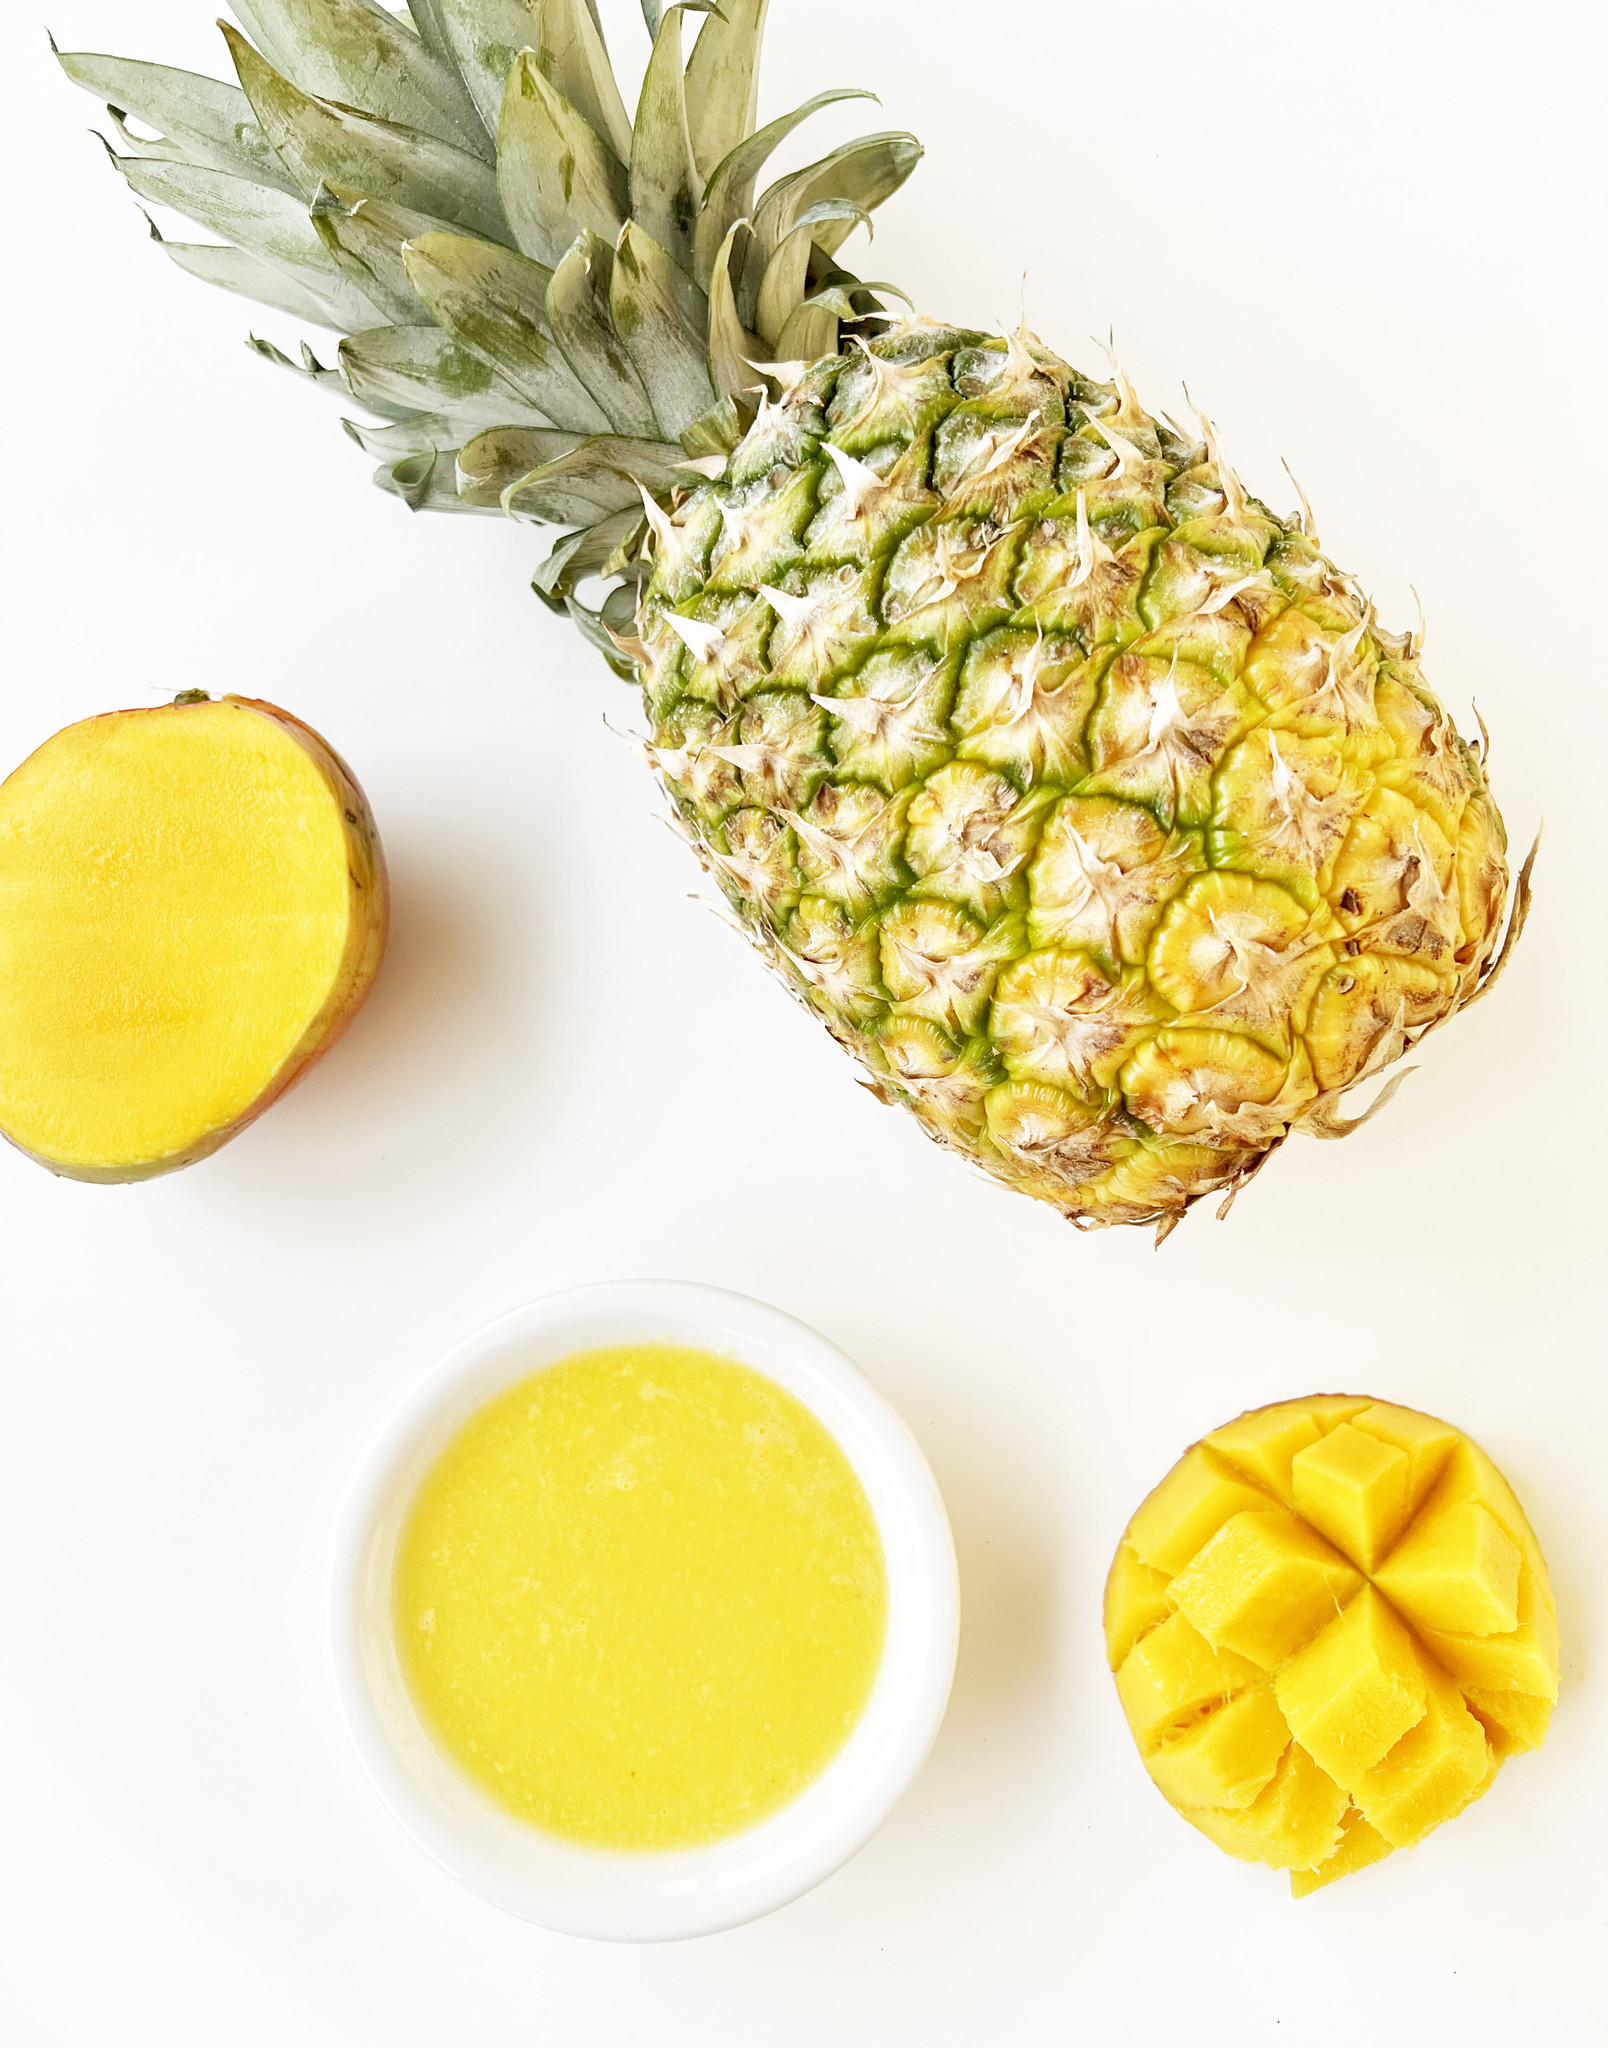 Pineapple and mango puree